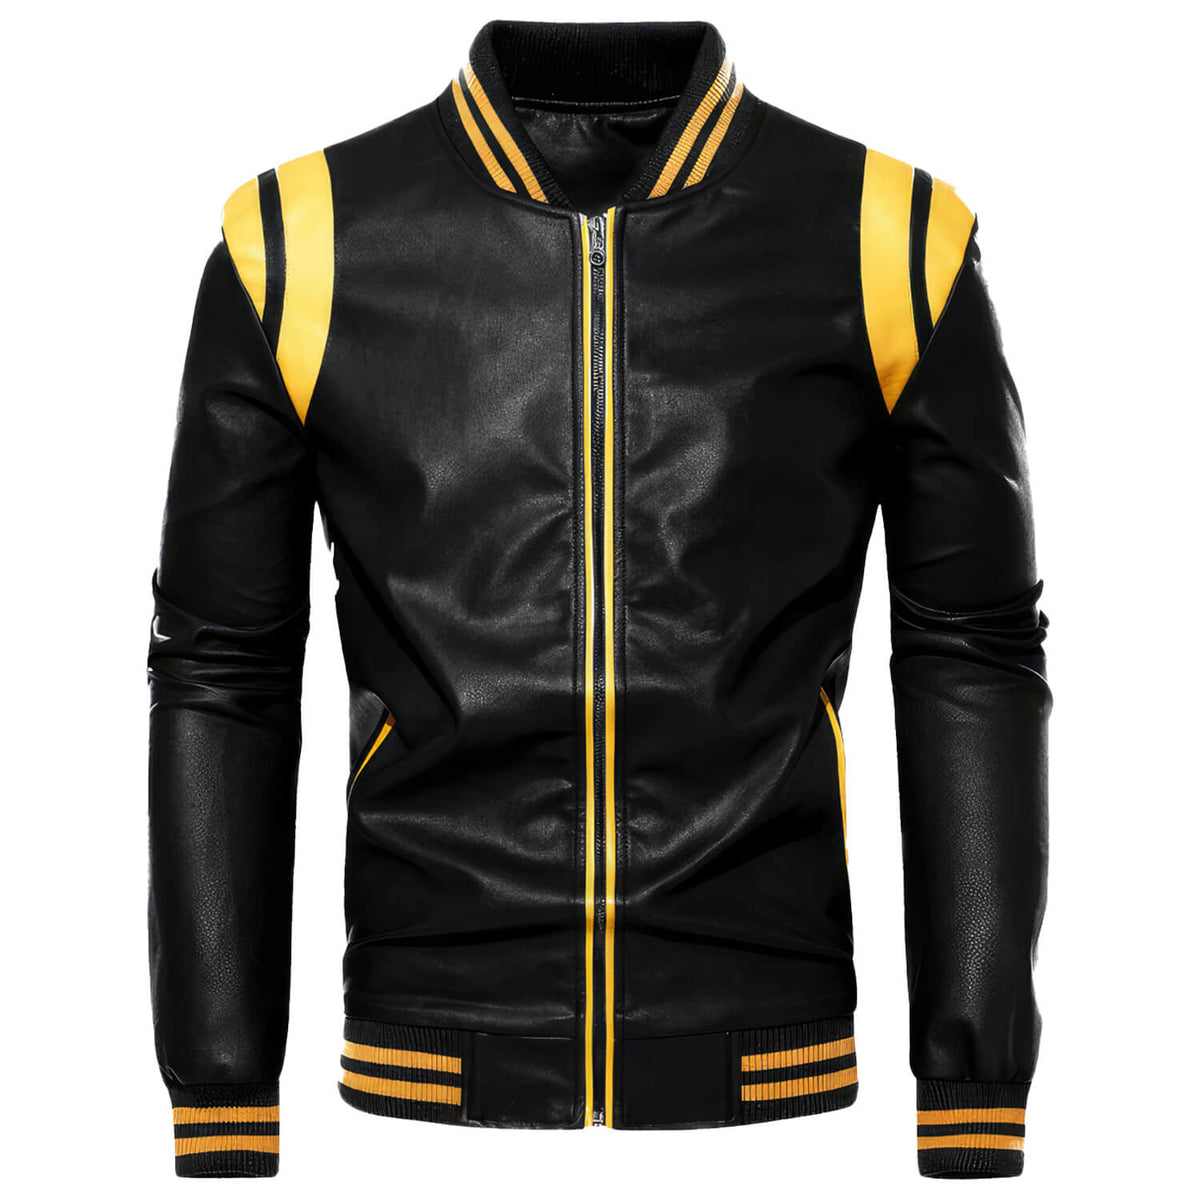 Men’s Black Biker Genuine Sheepskin Sporty Slim Fit Yellow Stripes Rib Knit Bomber Motorcycle Rider Leather Jacket - Front View - AceCart